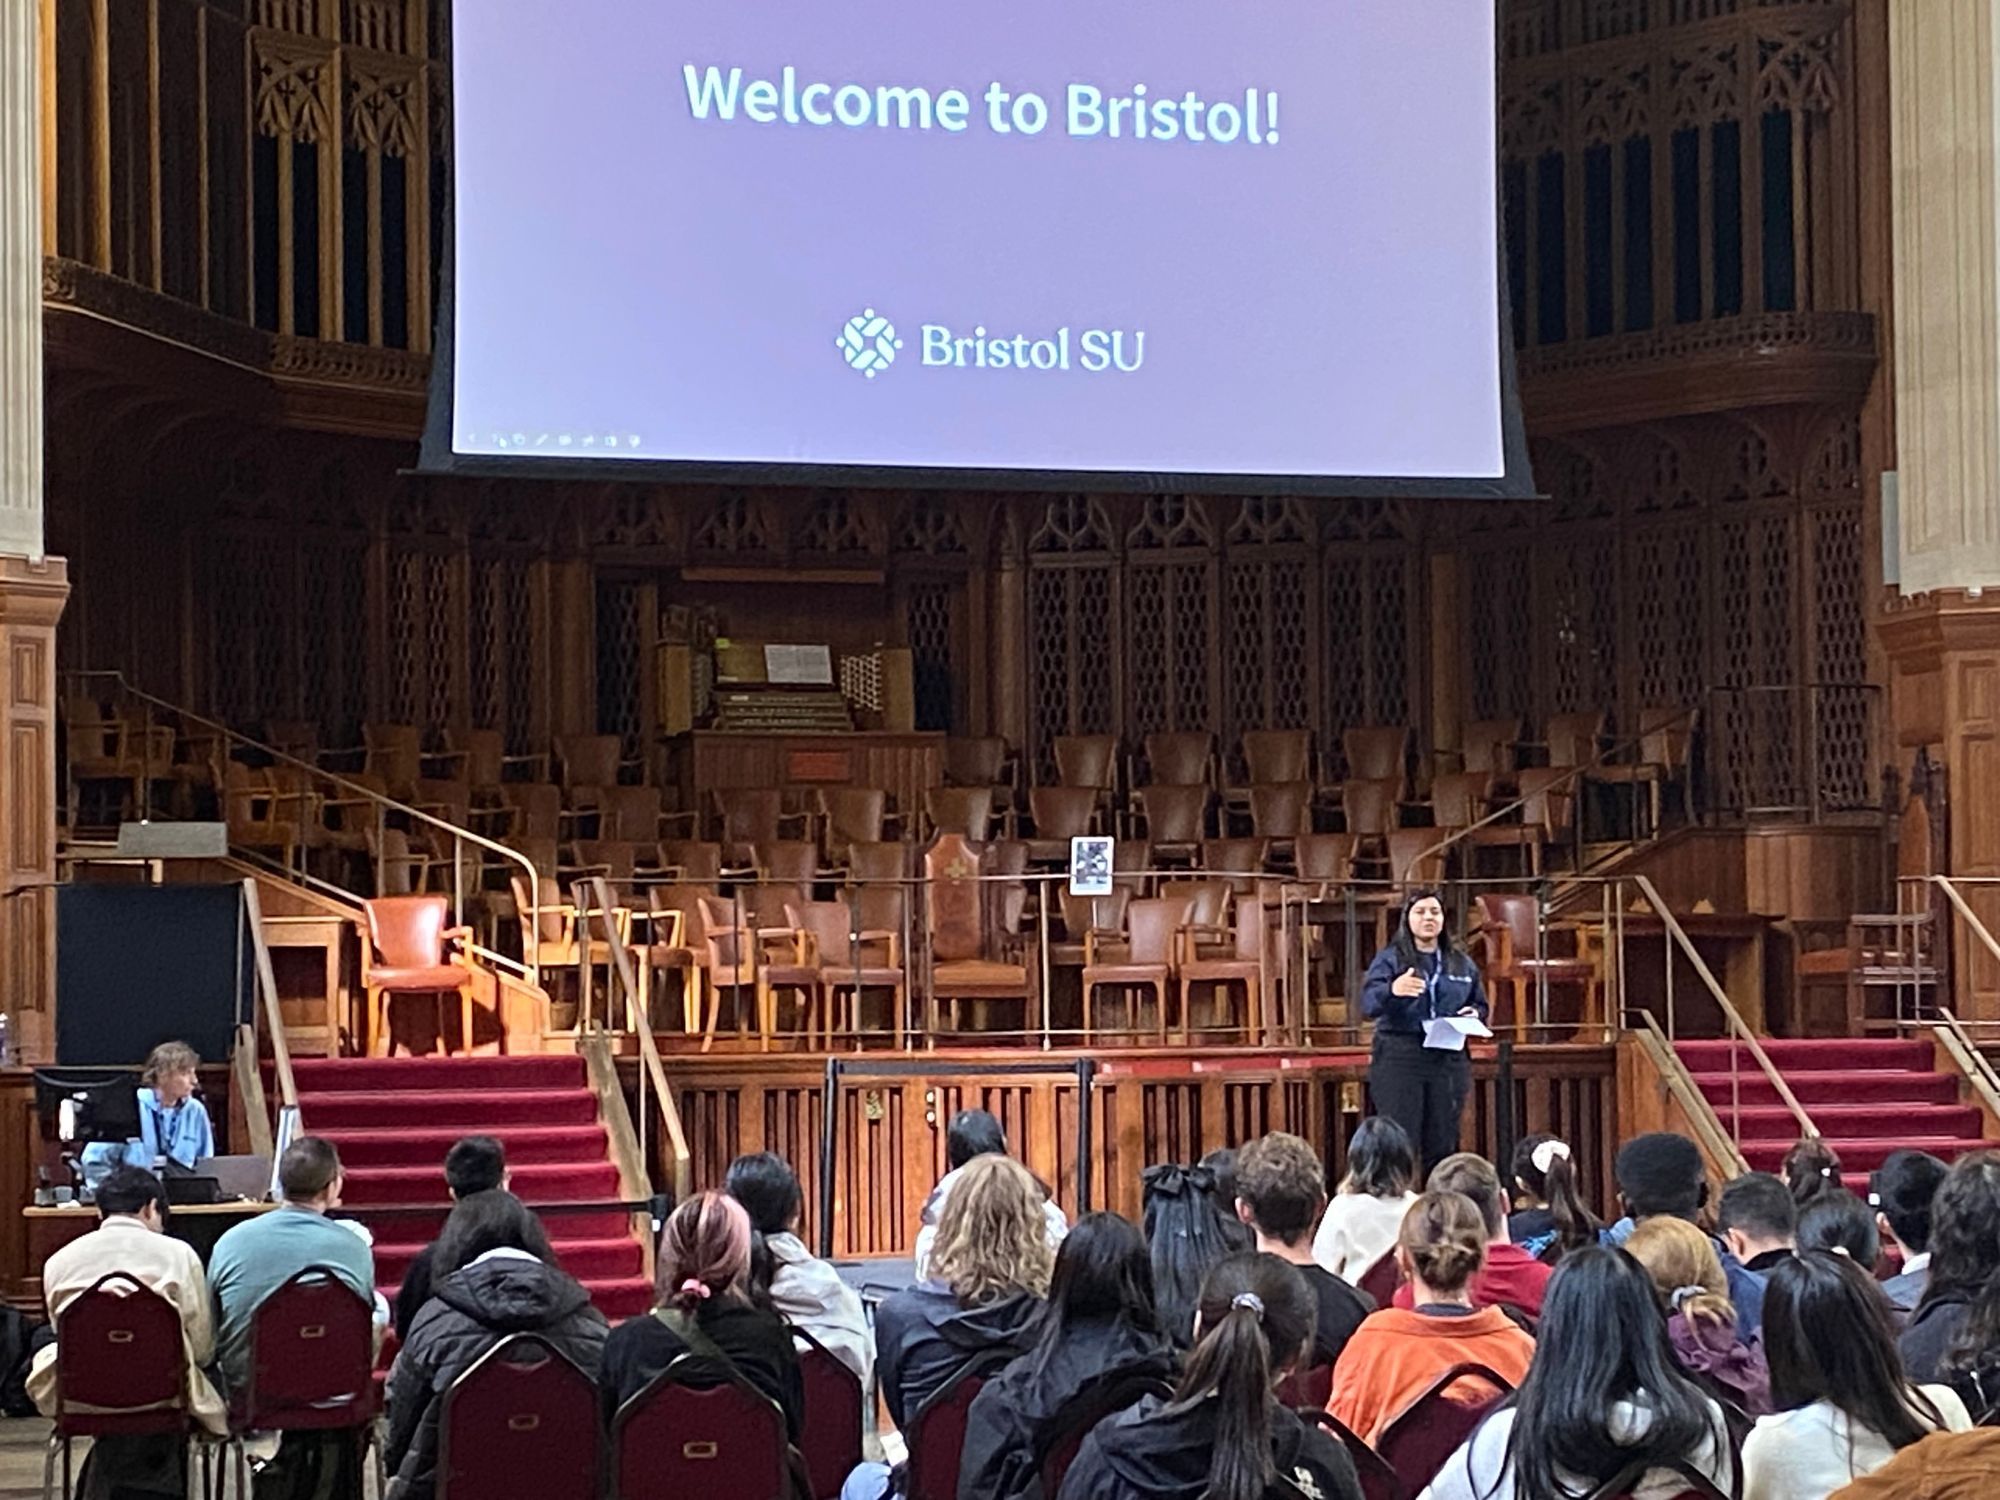 Why Bristol?, International students